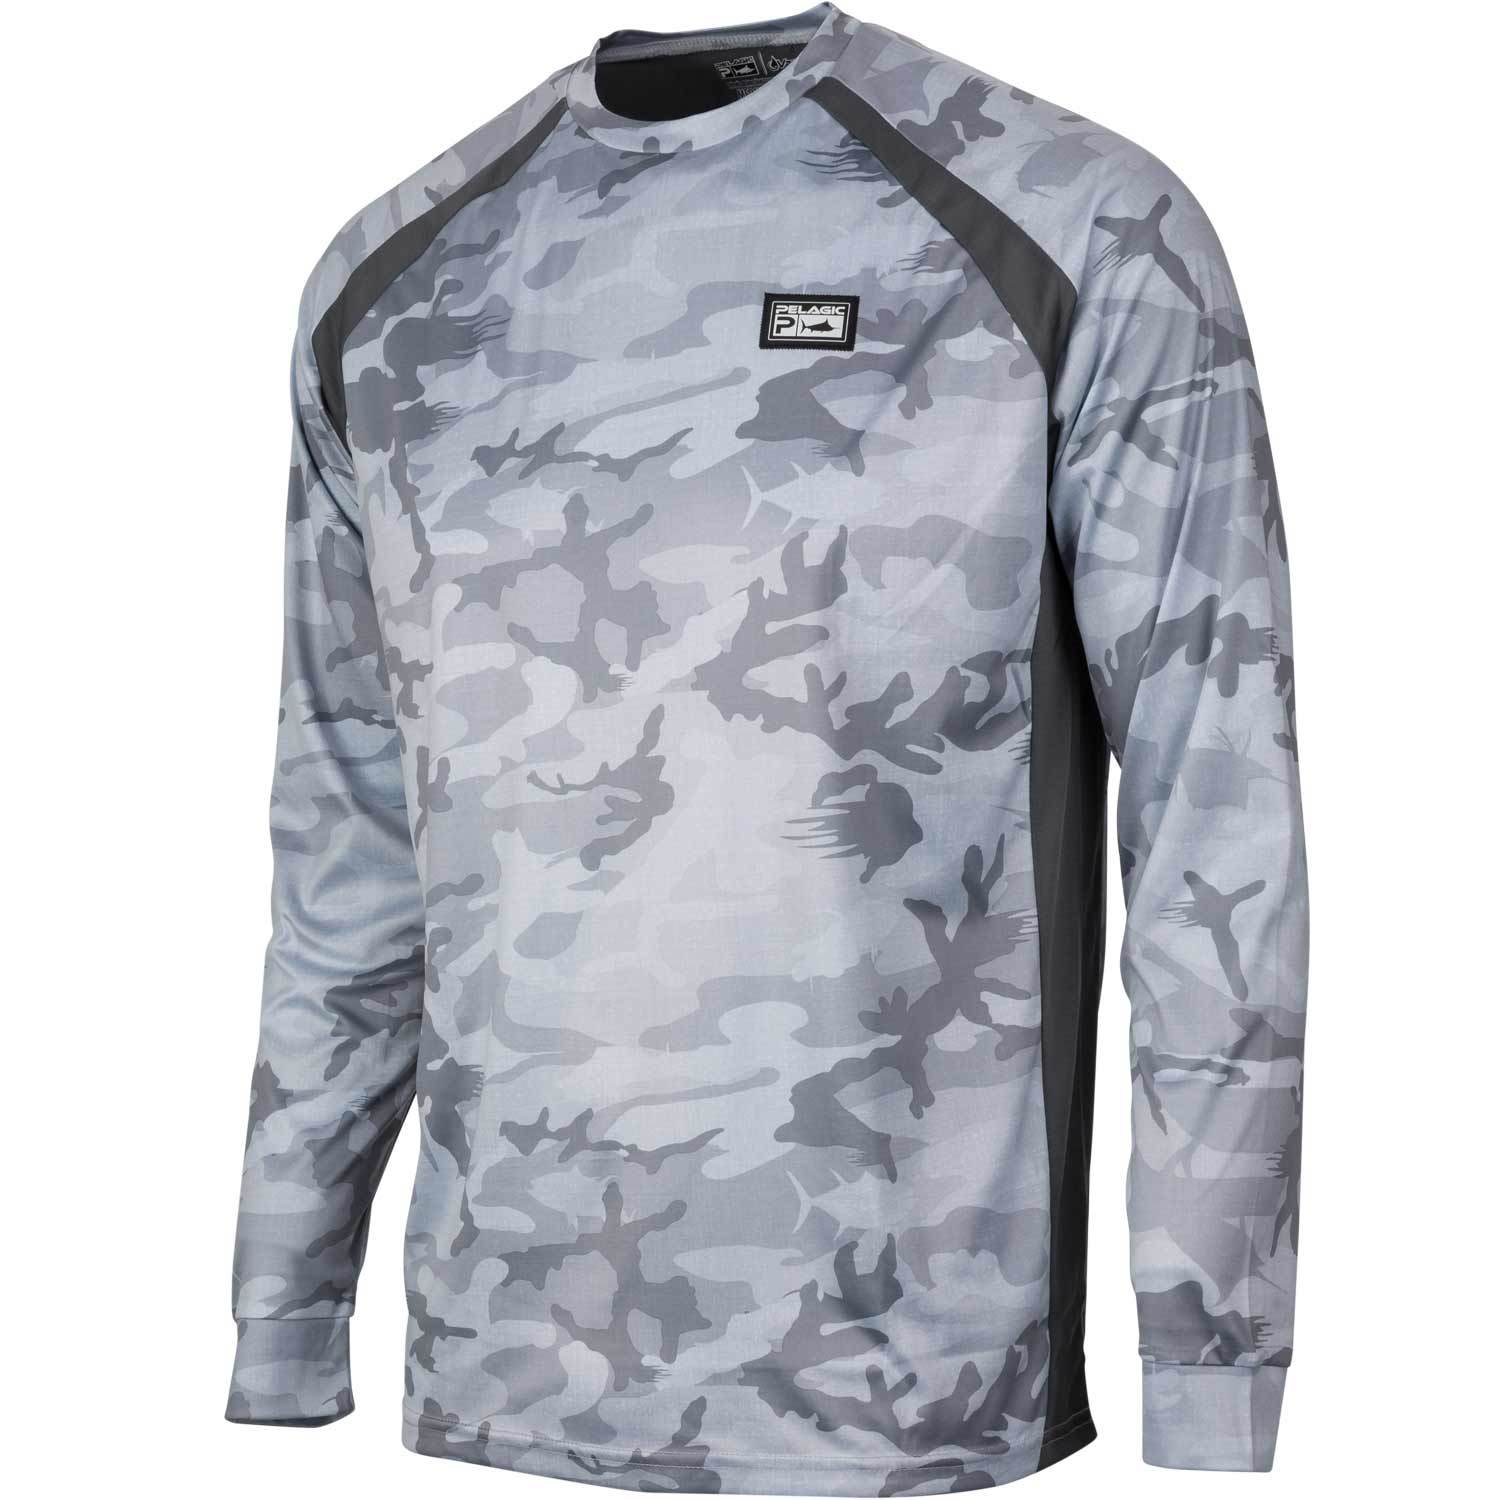 Men's VaporTek Fish Camo Tech Shirt | West Marine